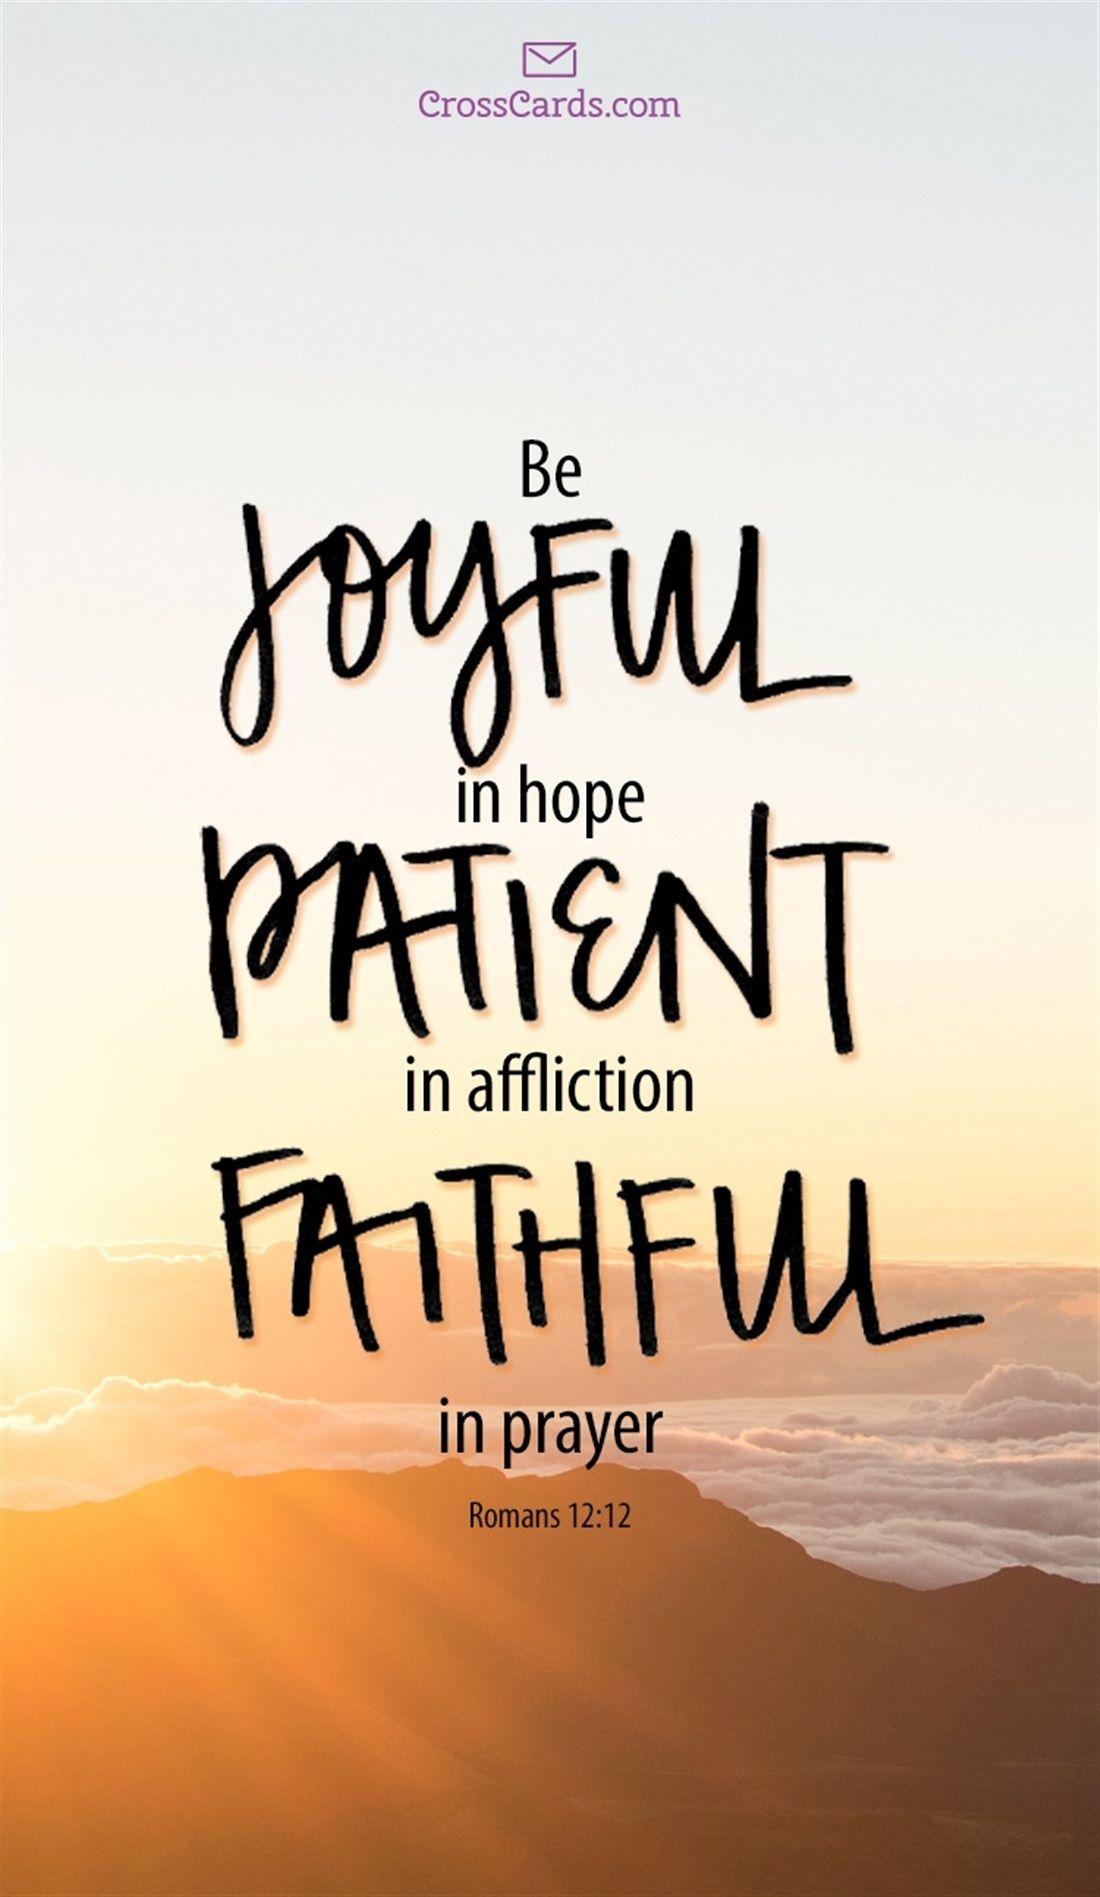 Be Joyful in Hope, Patient in Affliction, Faithful in Prayer